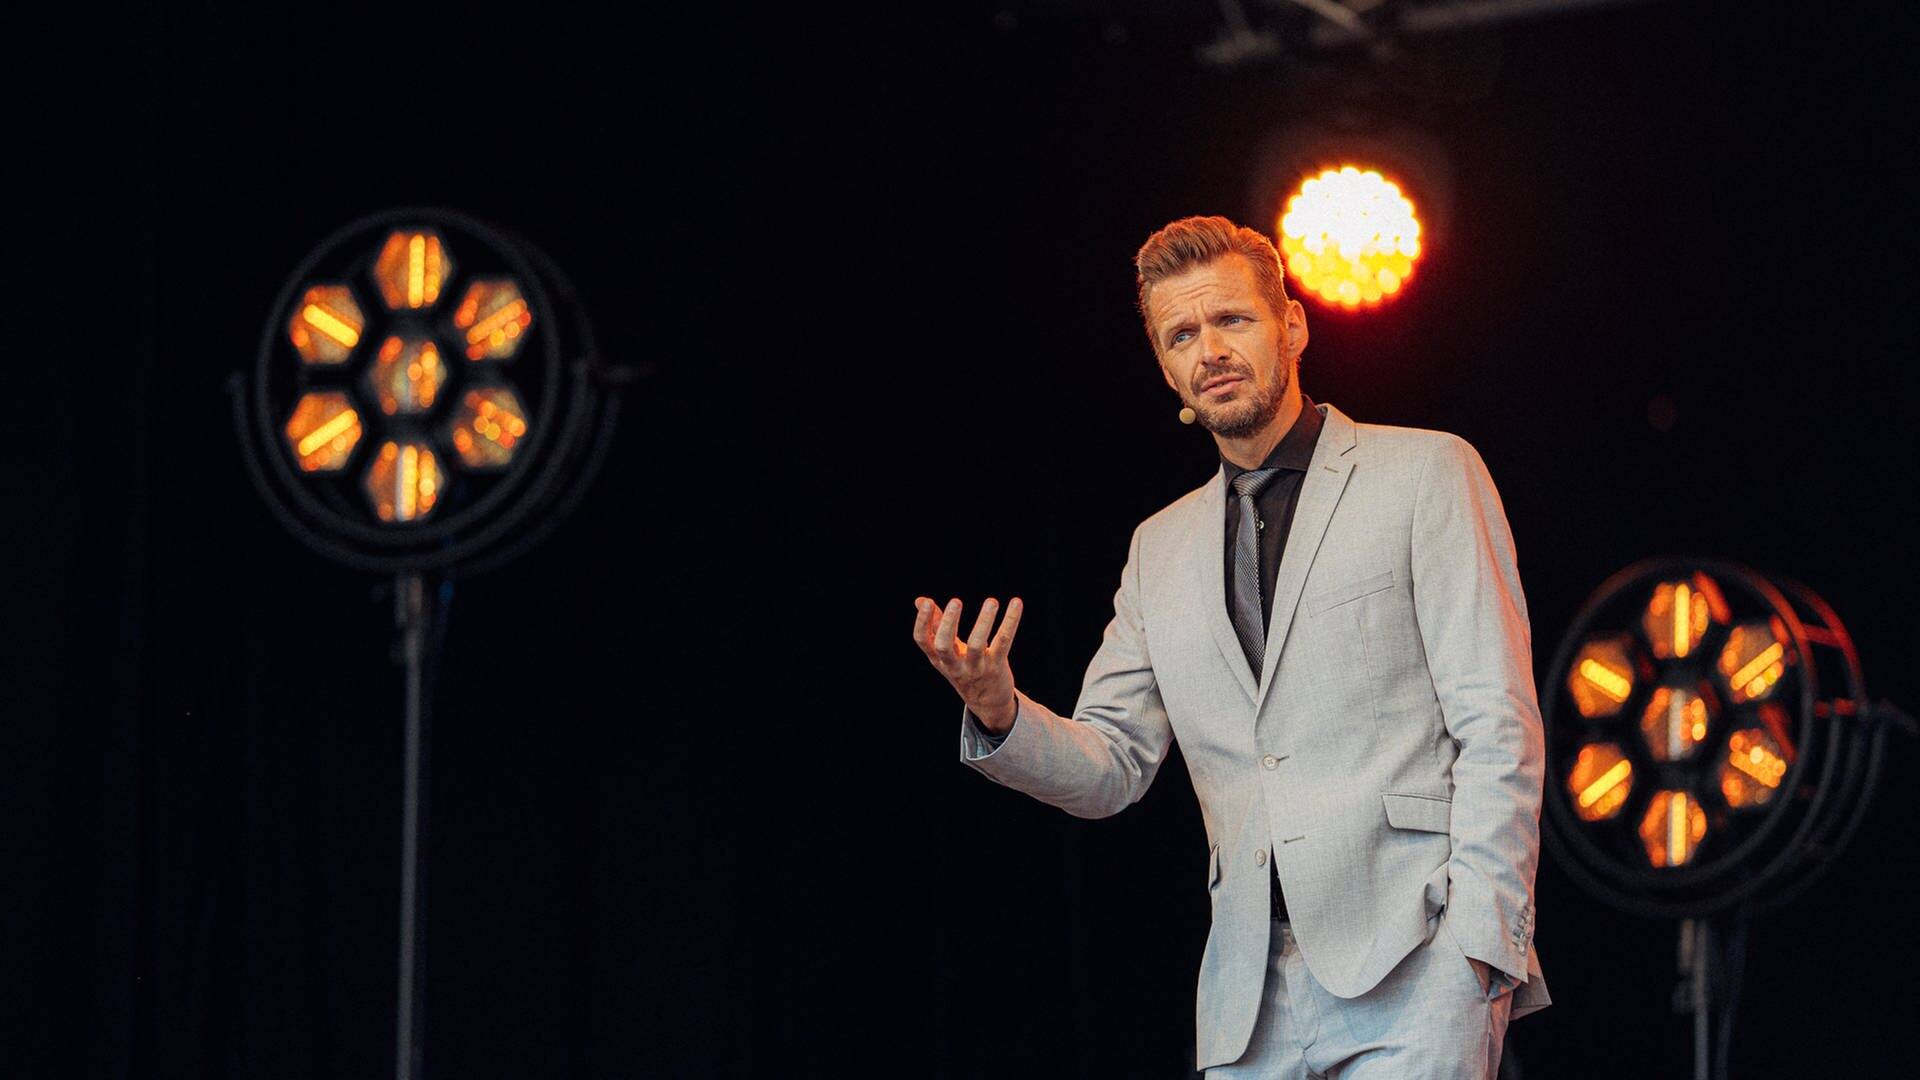 Florian Schroeder beim SWR3 Comedy Festival 2022